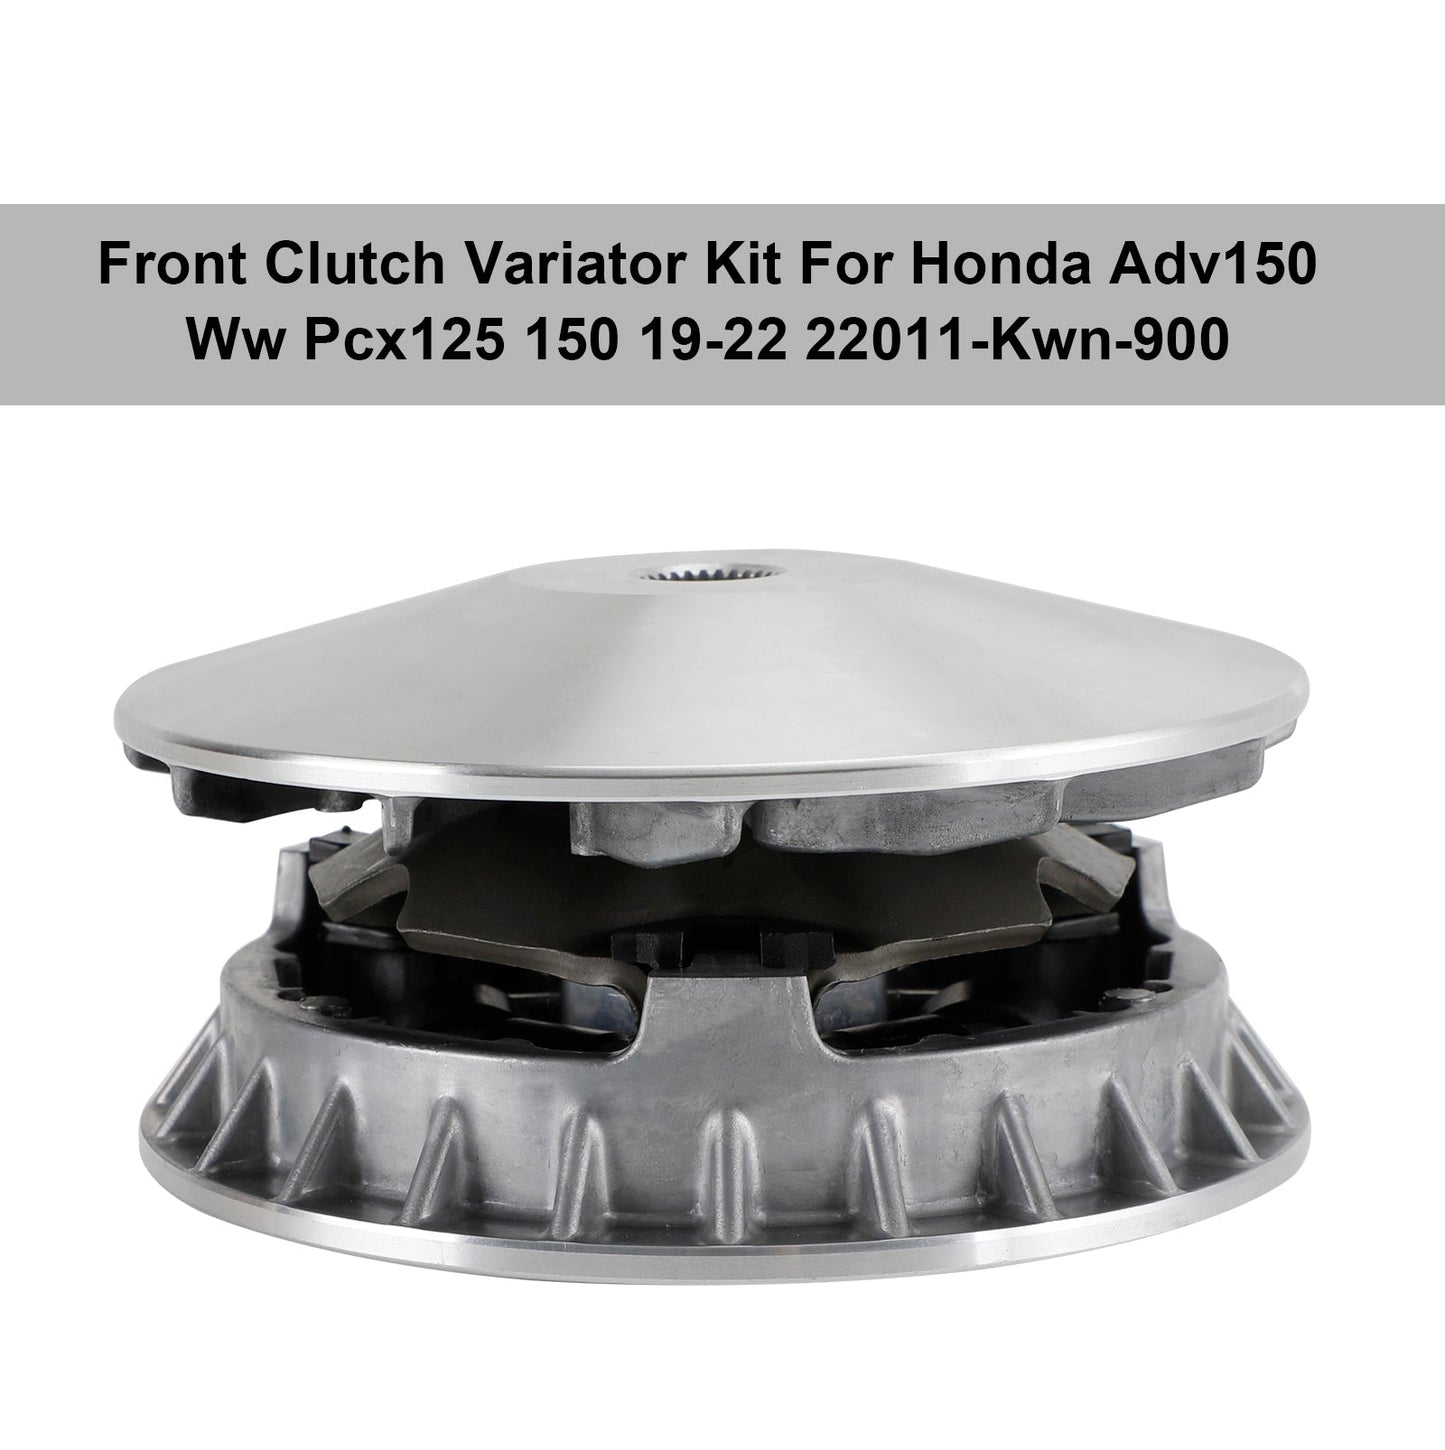 Front Clutch Variator Kit For Honda Adv150 Ww Pcx125 150 19-22 22011-Kwn-900